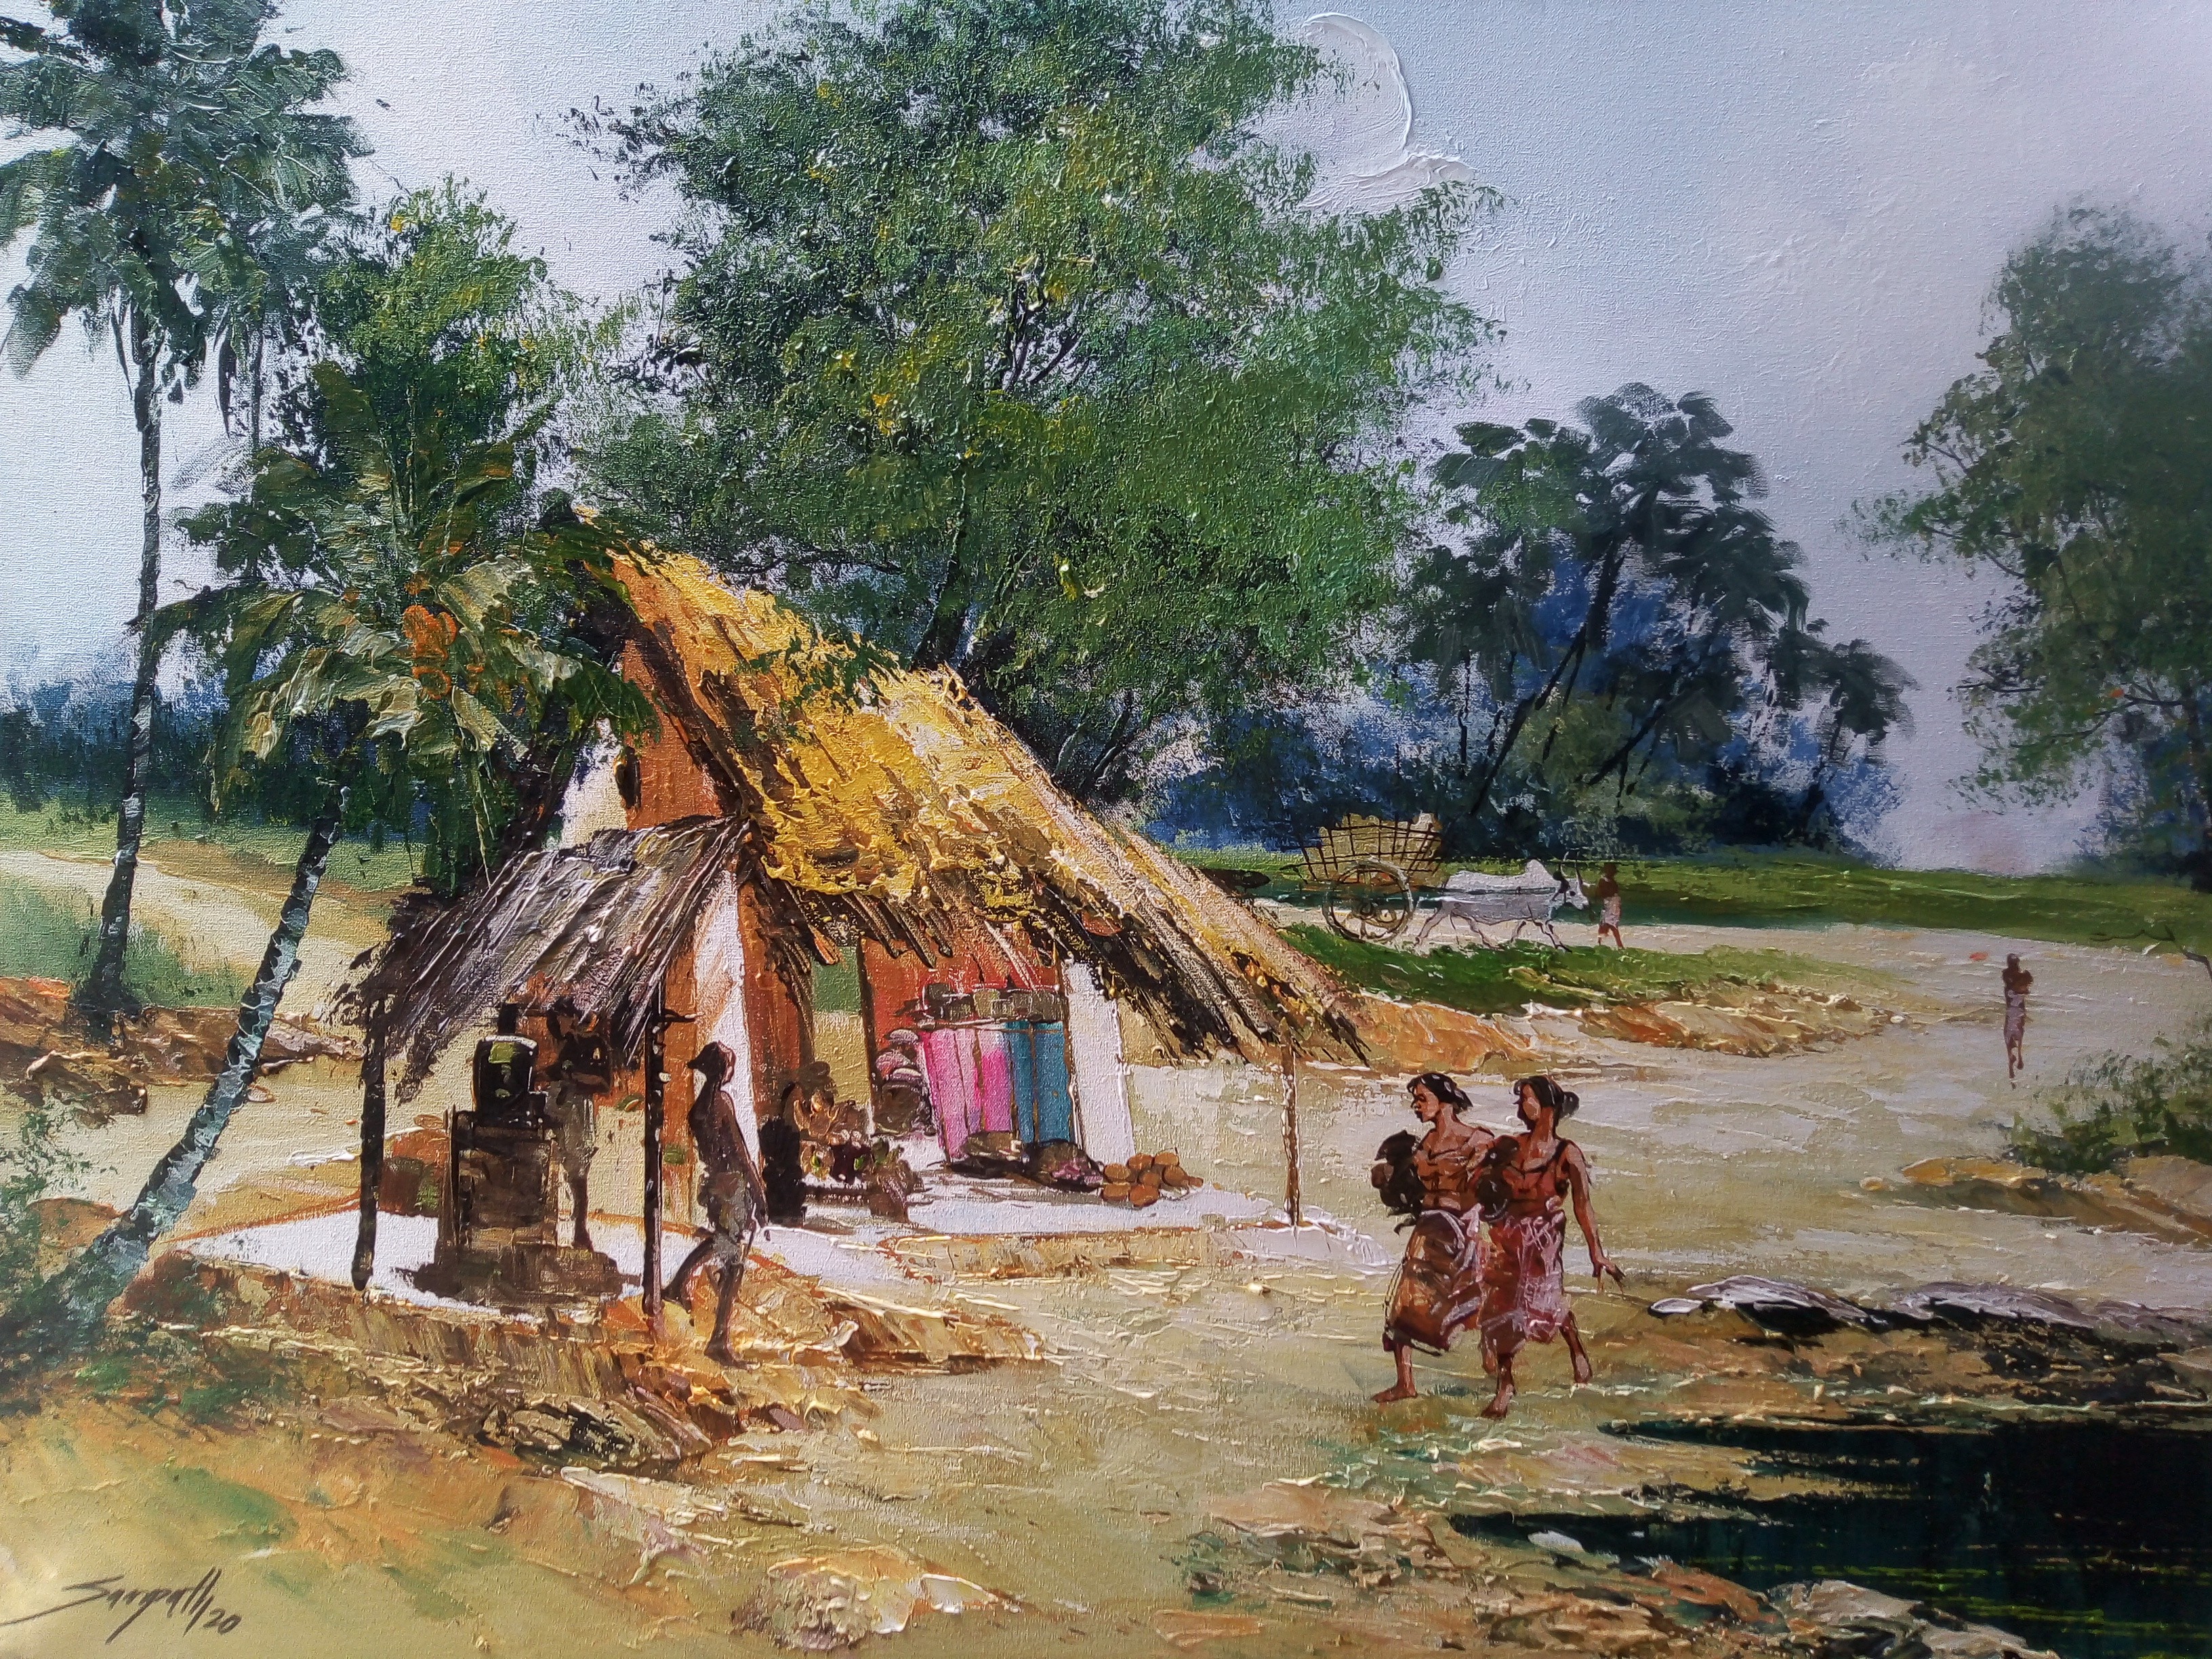 Village scenes by Sampath Niroshan